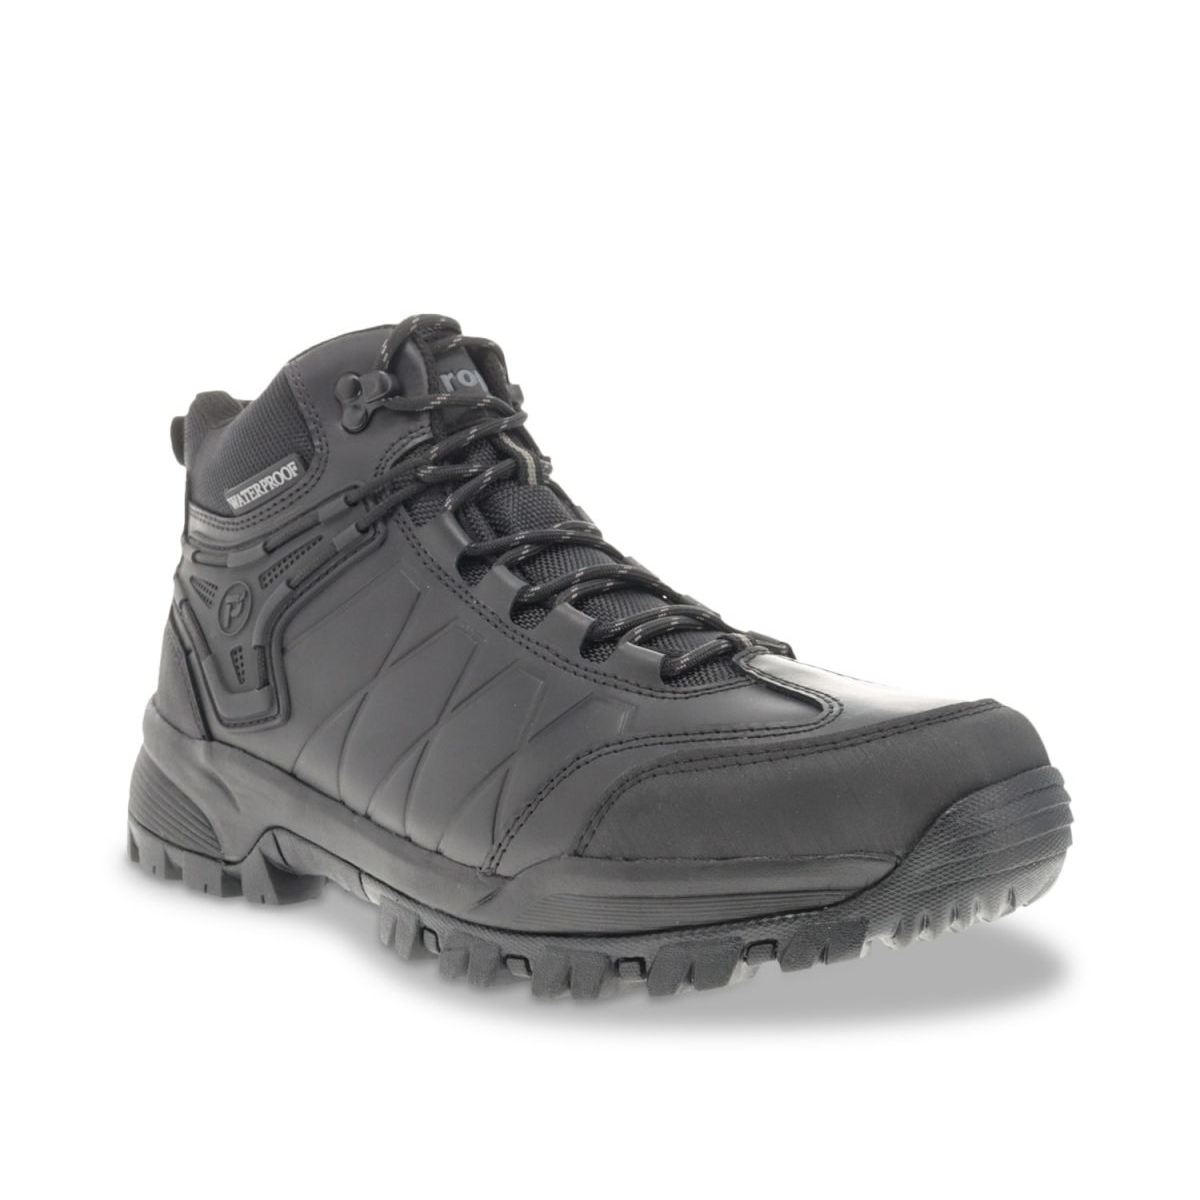 Propet Men's Ridge Walker Force Hiking Boots Black - MBA052LBLK BLACK - BLACK, 16